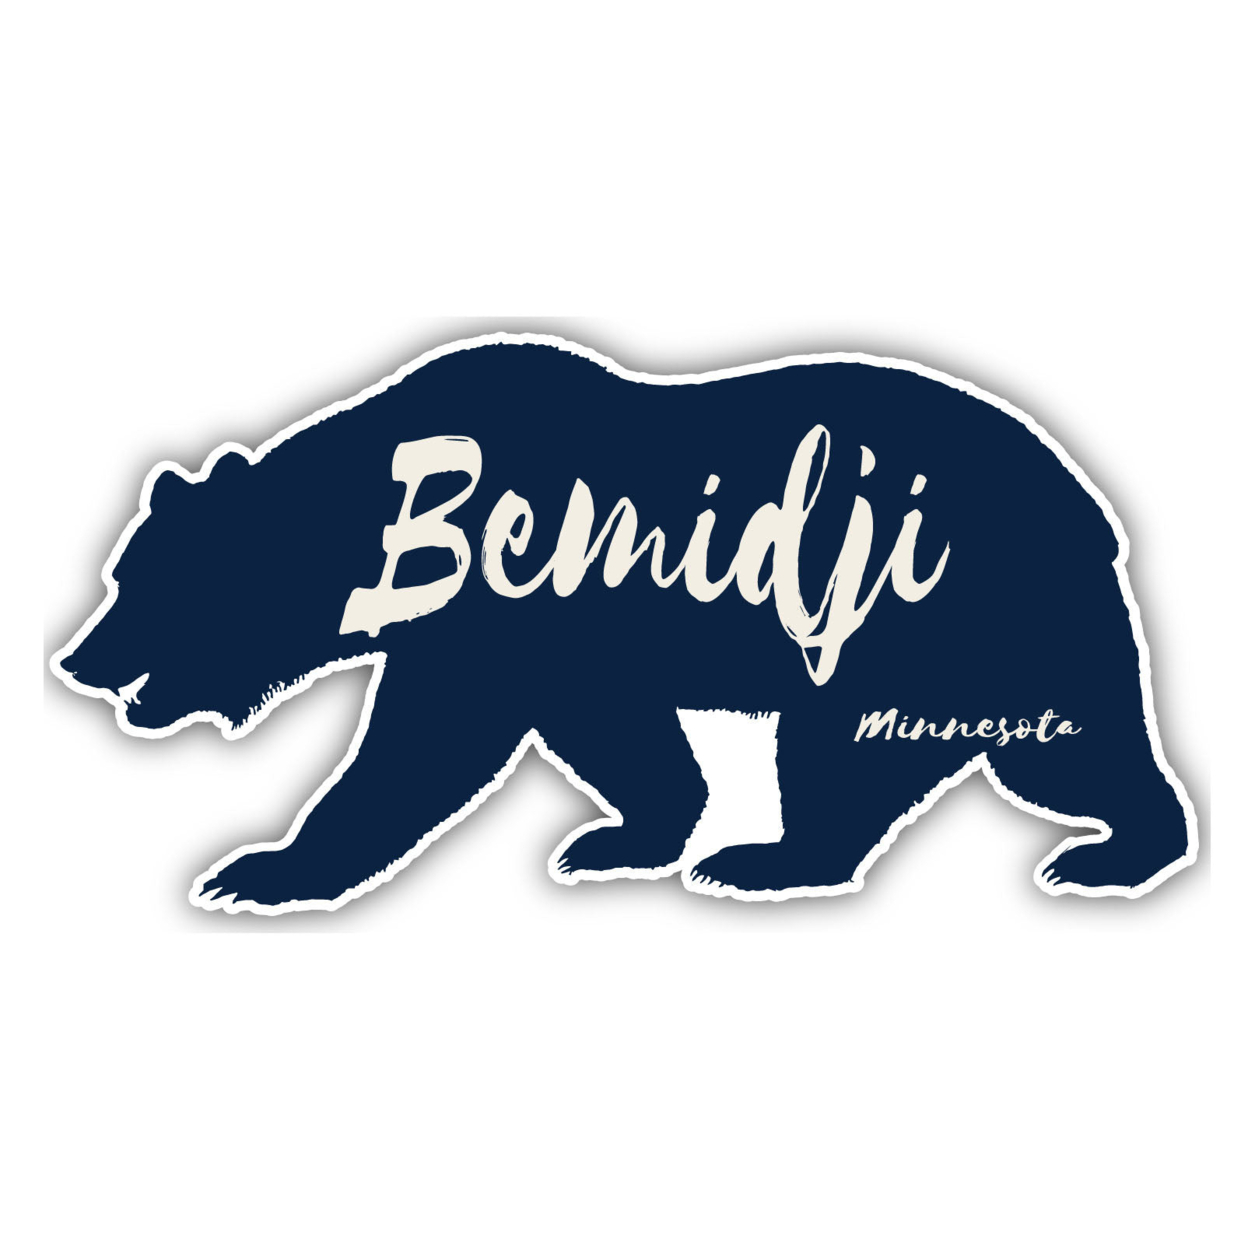 Bemidji Minnesota Souvenir Decorative Stickers (Choose Theme And Size) - 4-Pack, 6-Inch, Adventures Awaits